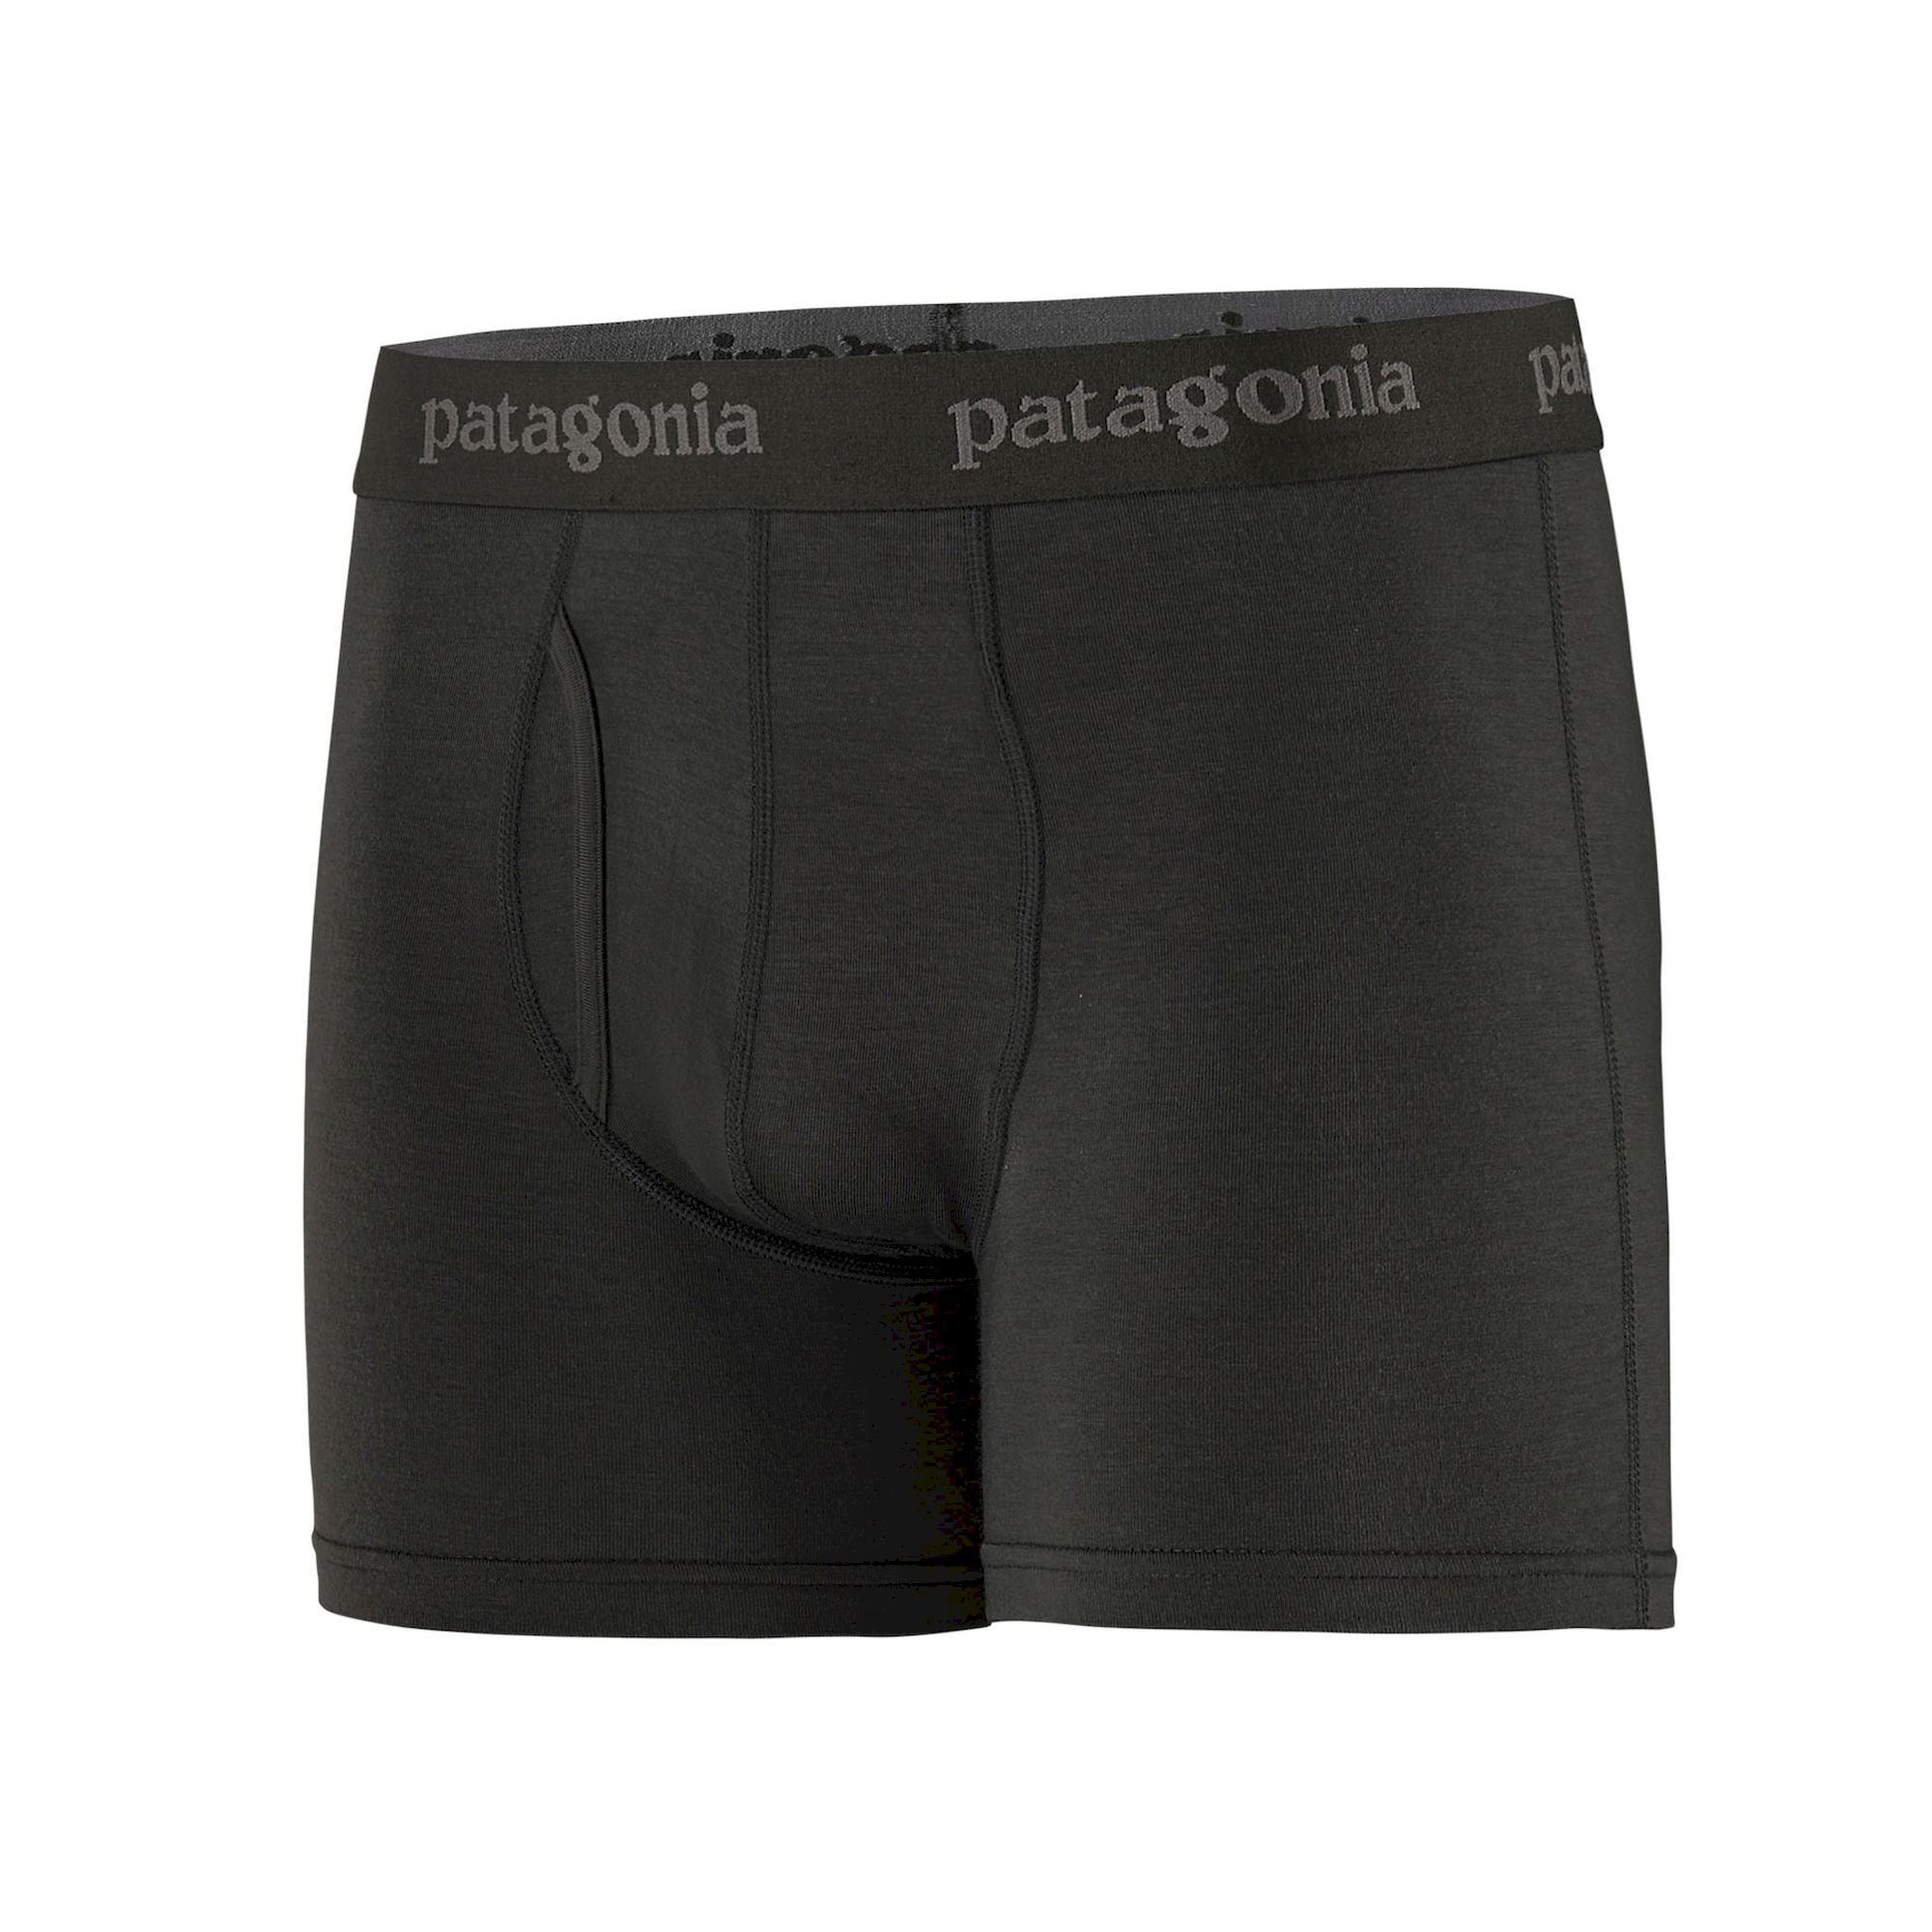 Patagonia - Essential Boxer Briefs - 3" - Ropa interior - Hombre